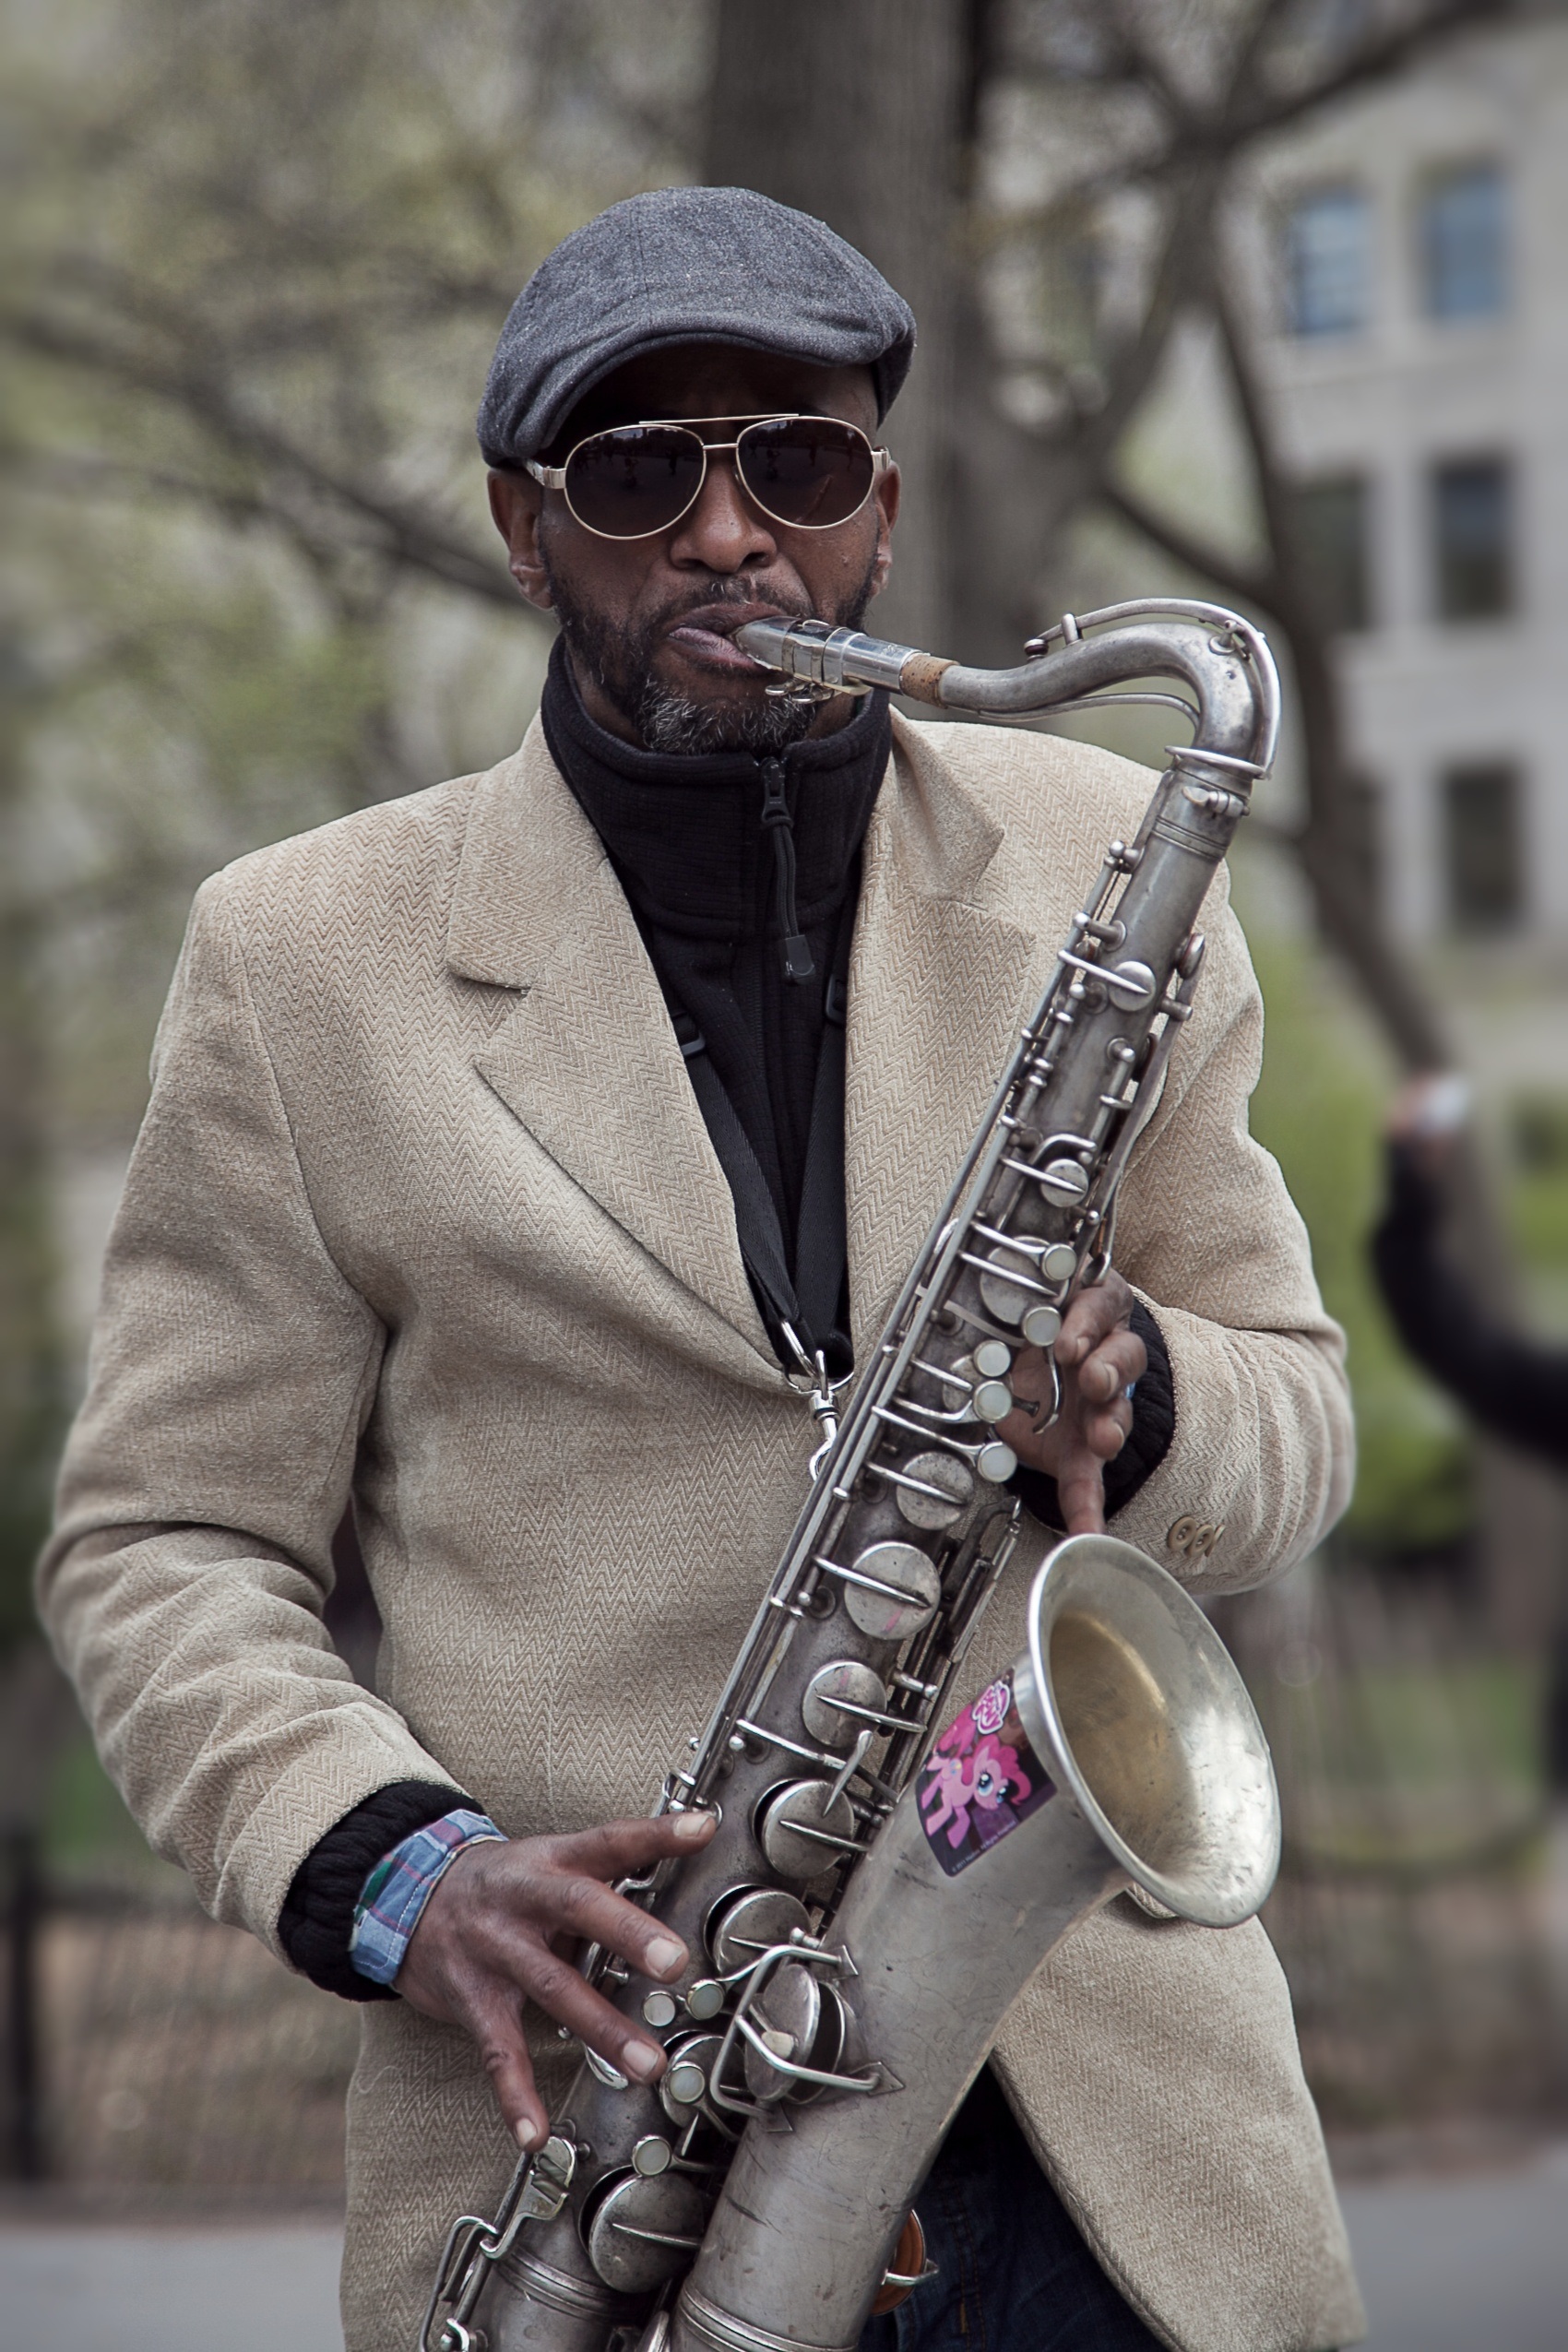 Playing saxophone. Афроамериканец музыкант джаз блюз. Саксофонист. Джазовый саксофонист. Саксофон и музыкант.